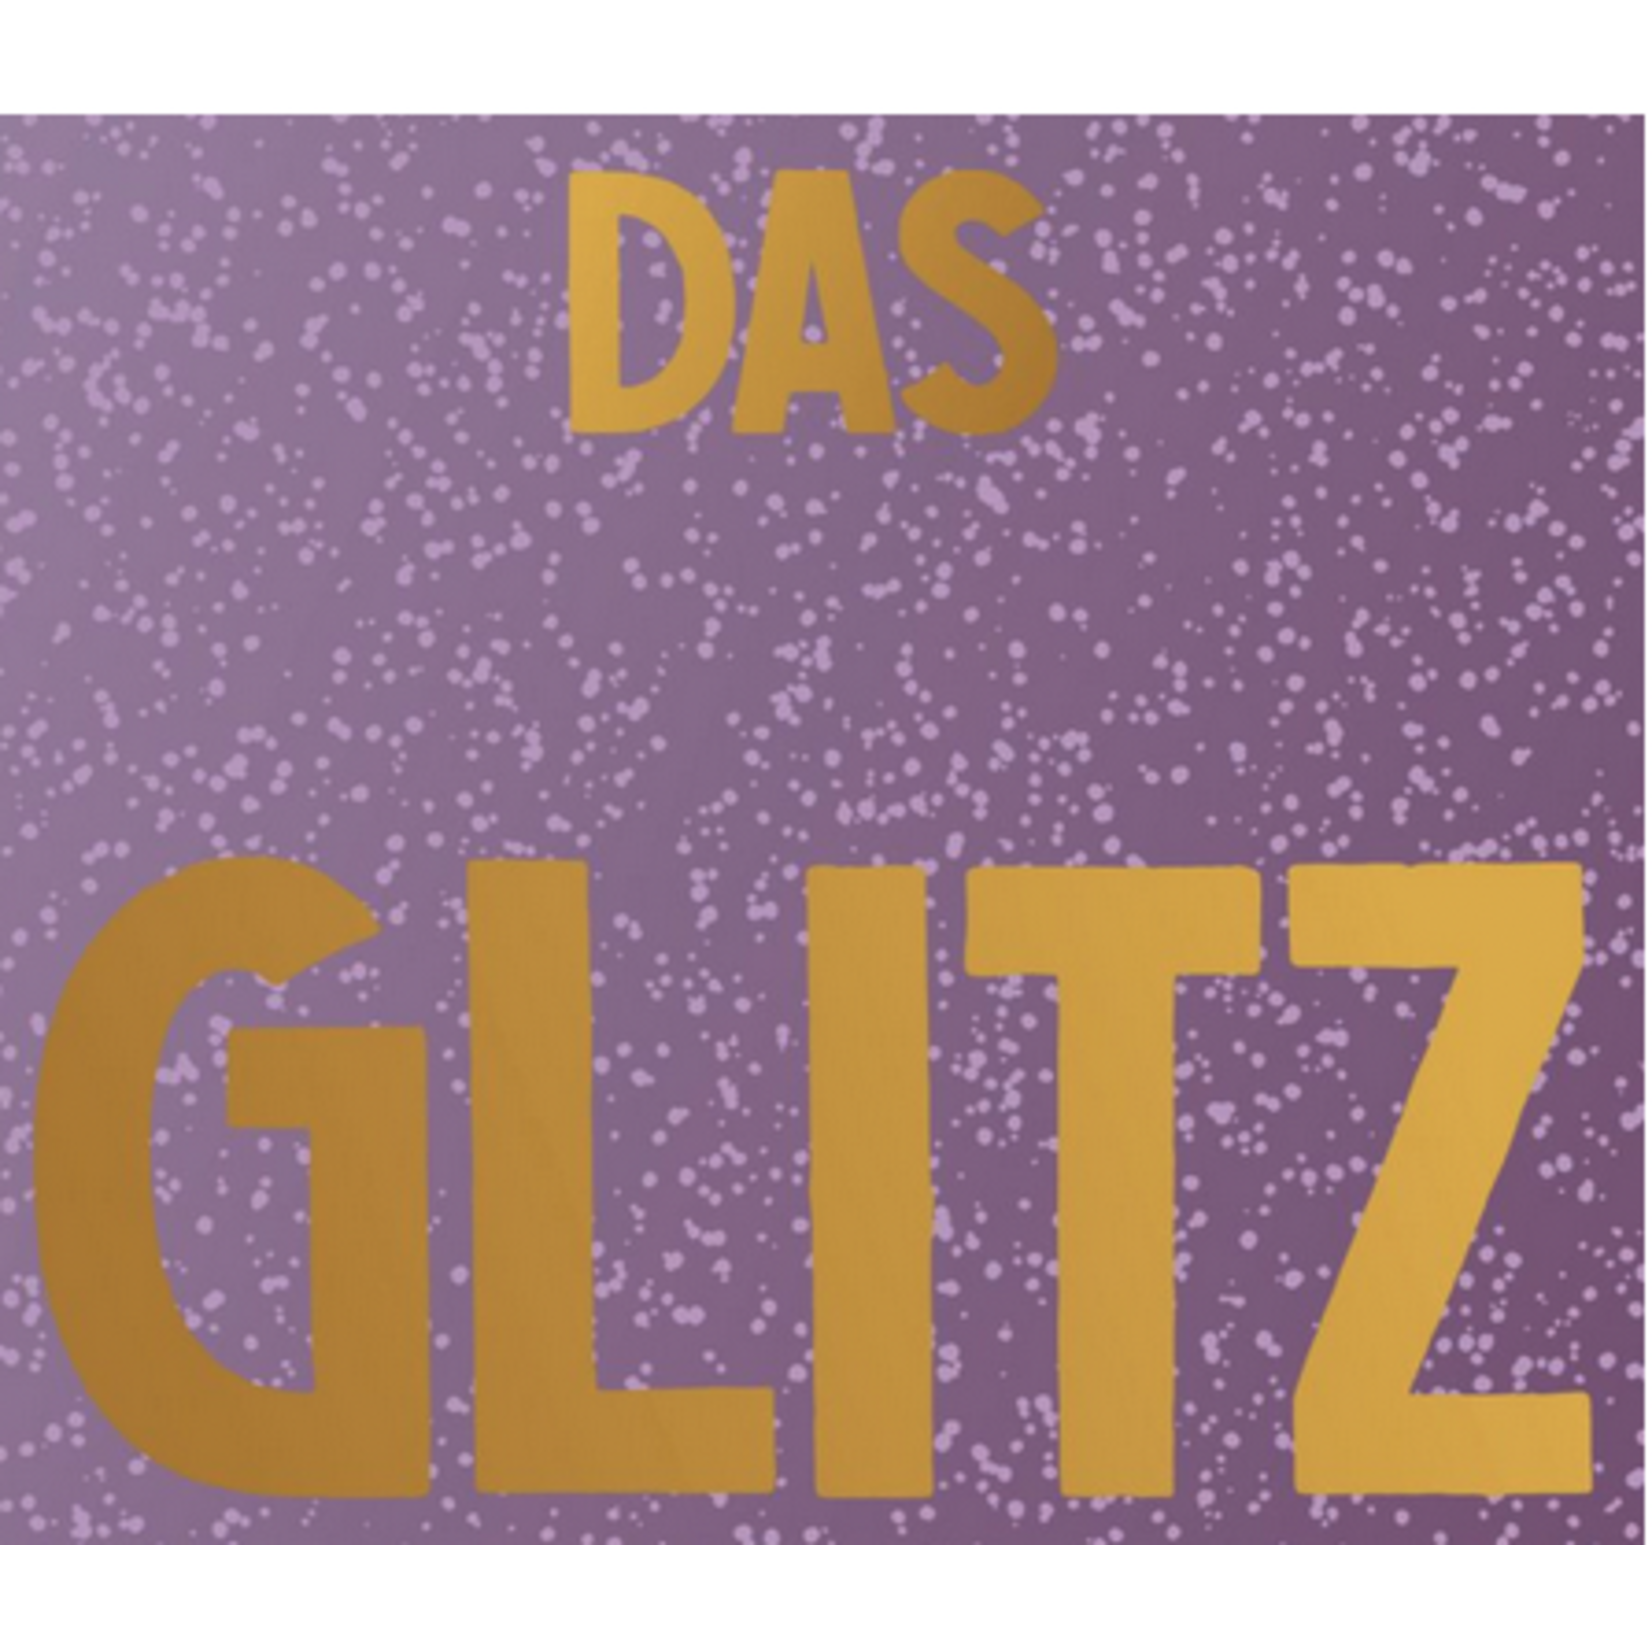 Sparkling Das Glitz Pet Nat Weiss 2022